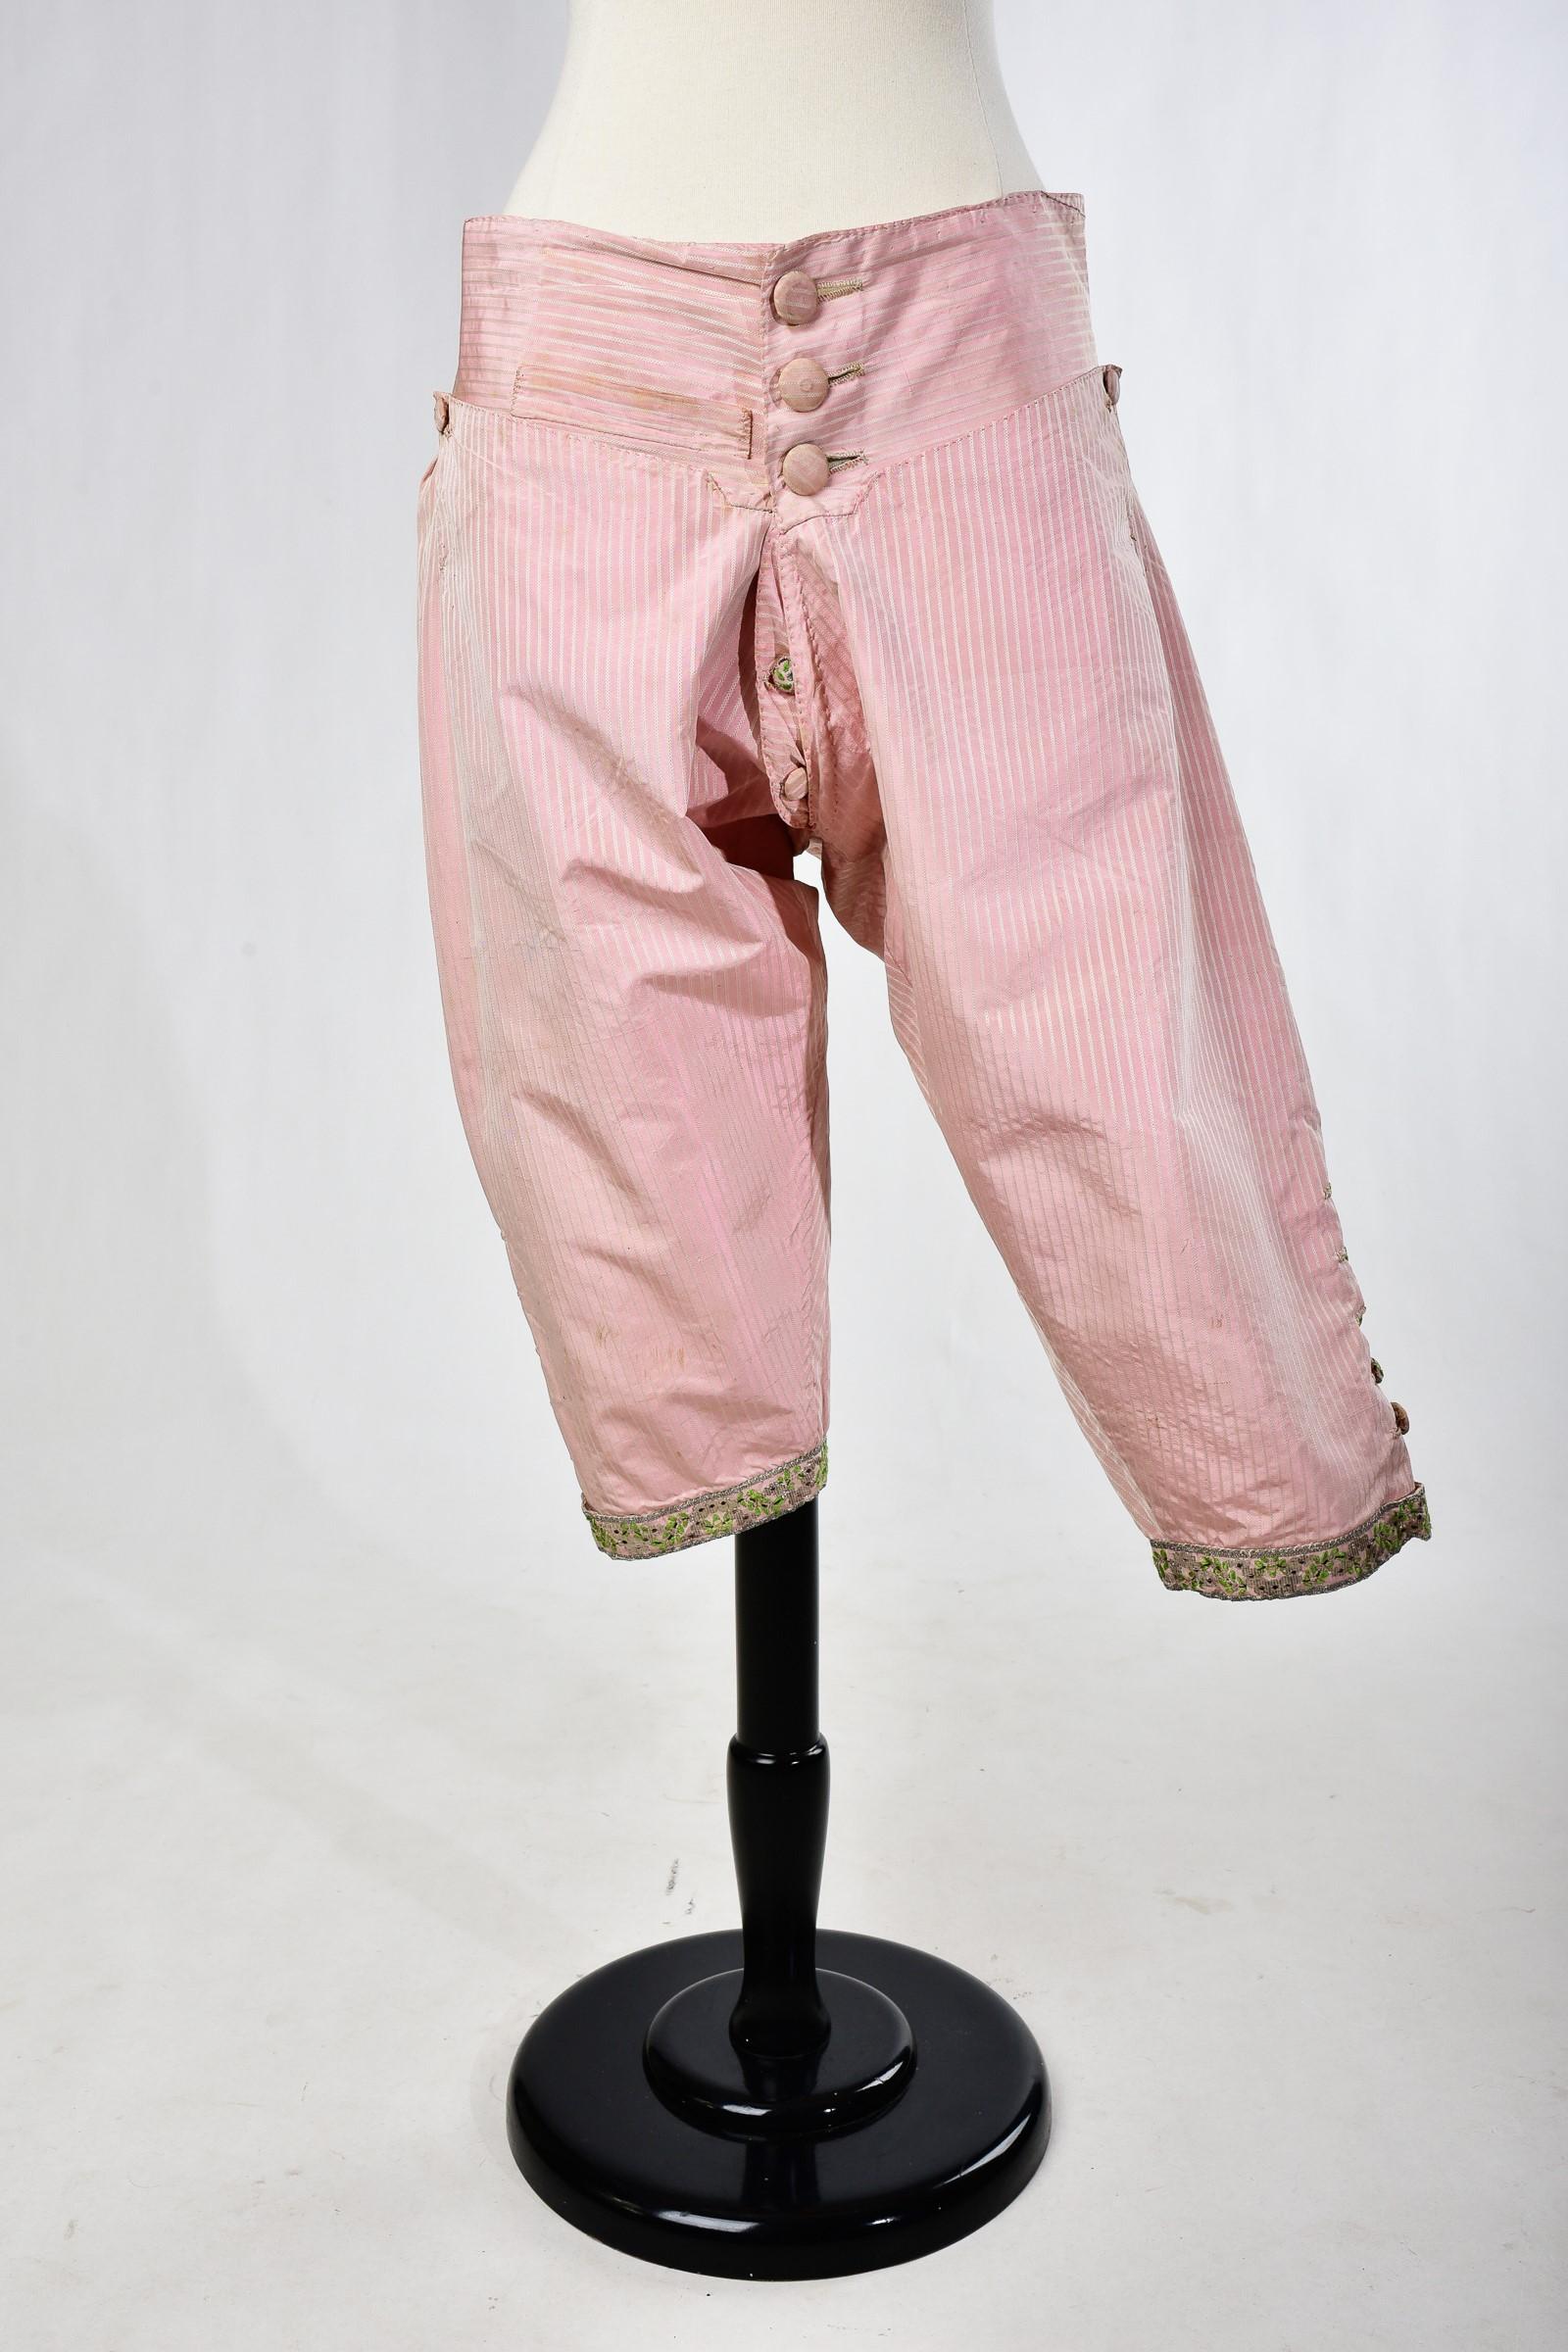 garanimals clothing 1980s